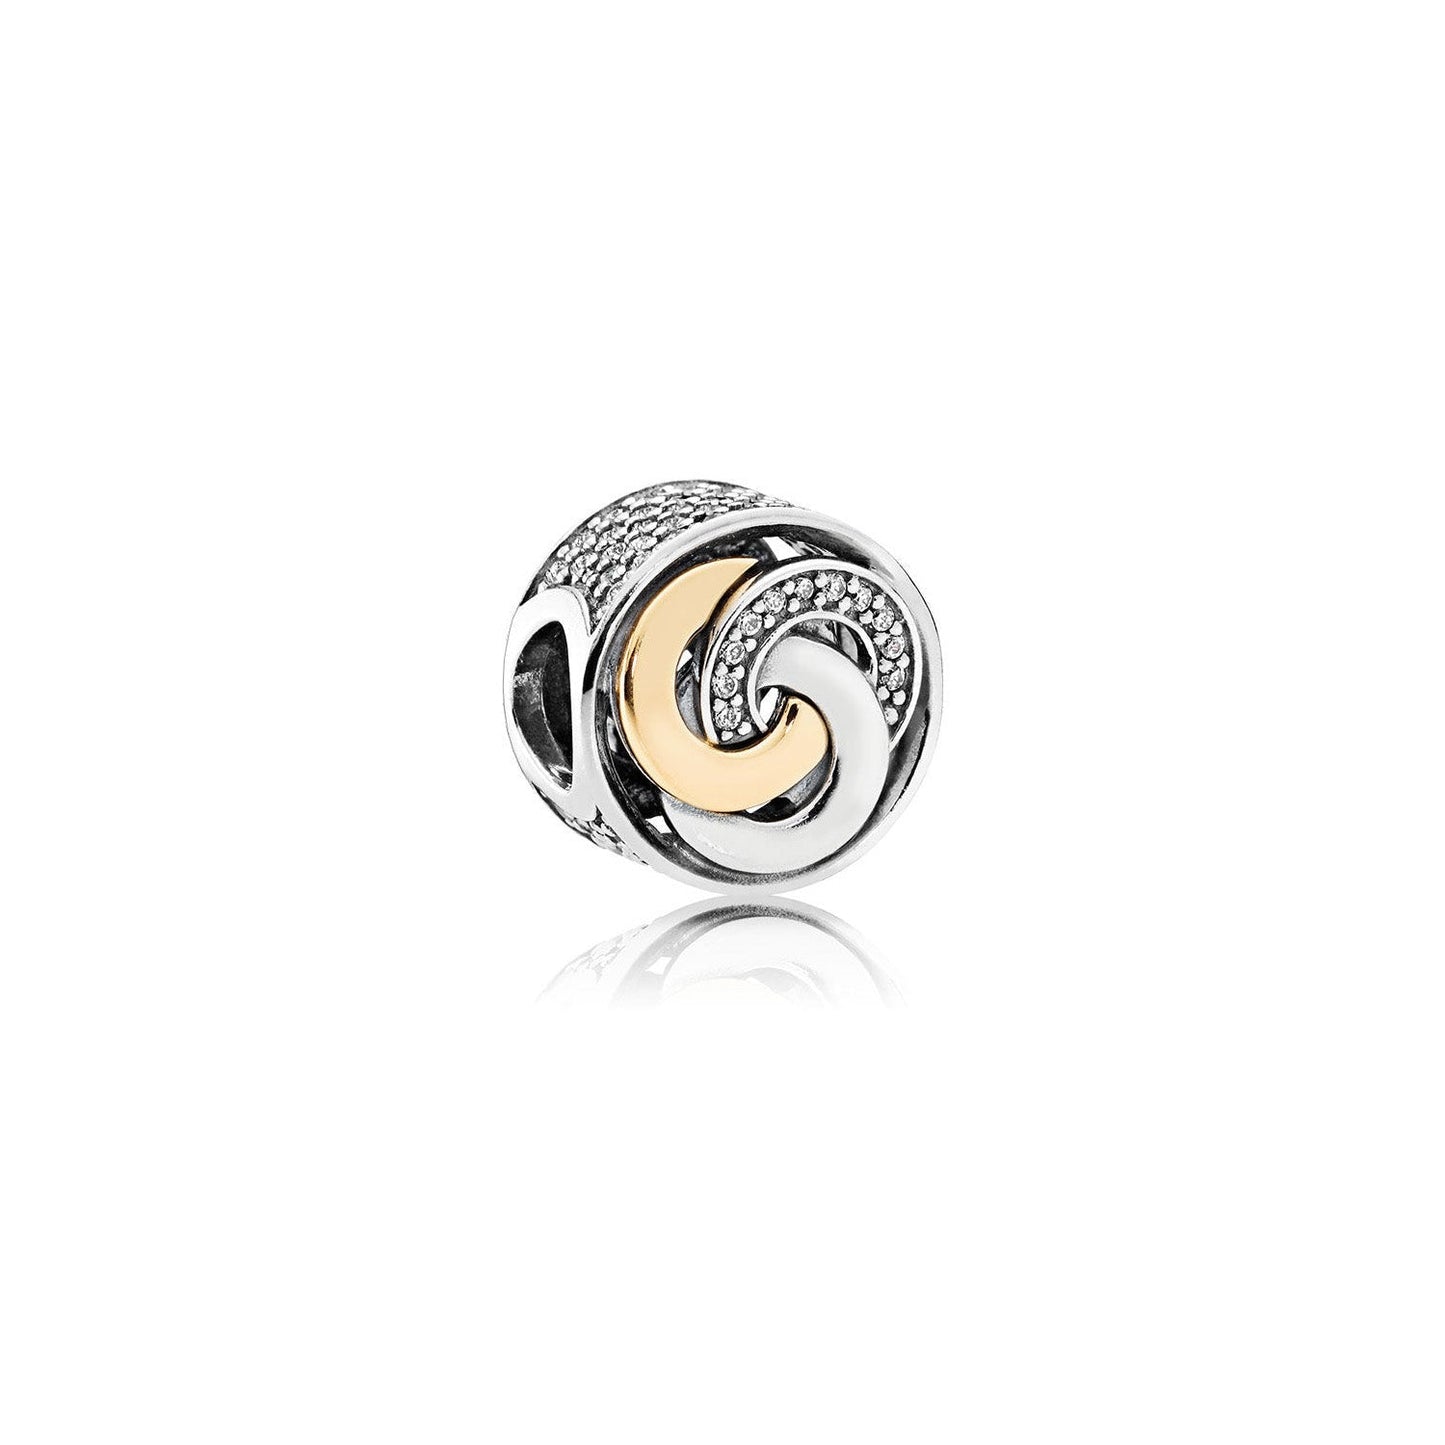 Interlinked Circles Charm - Sterling Silver, Cubic Zirconia Gemstones - ARJWVC1051RD ARCADIO